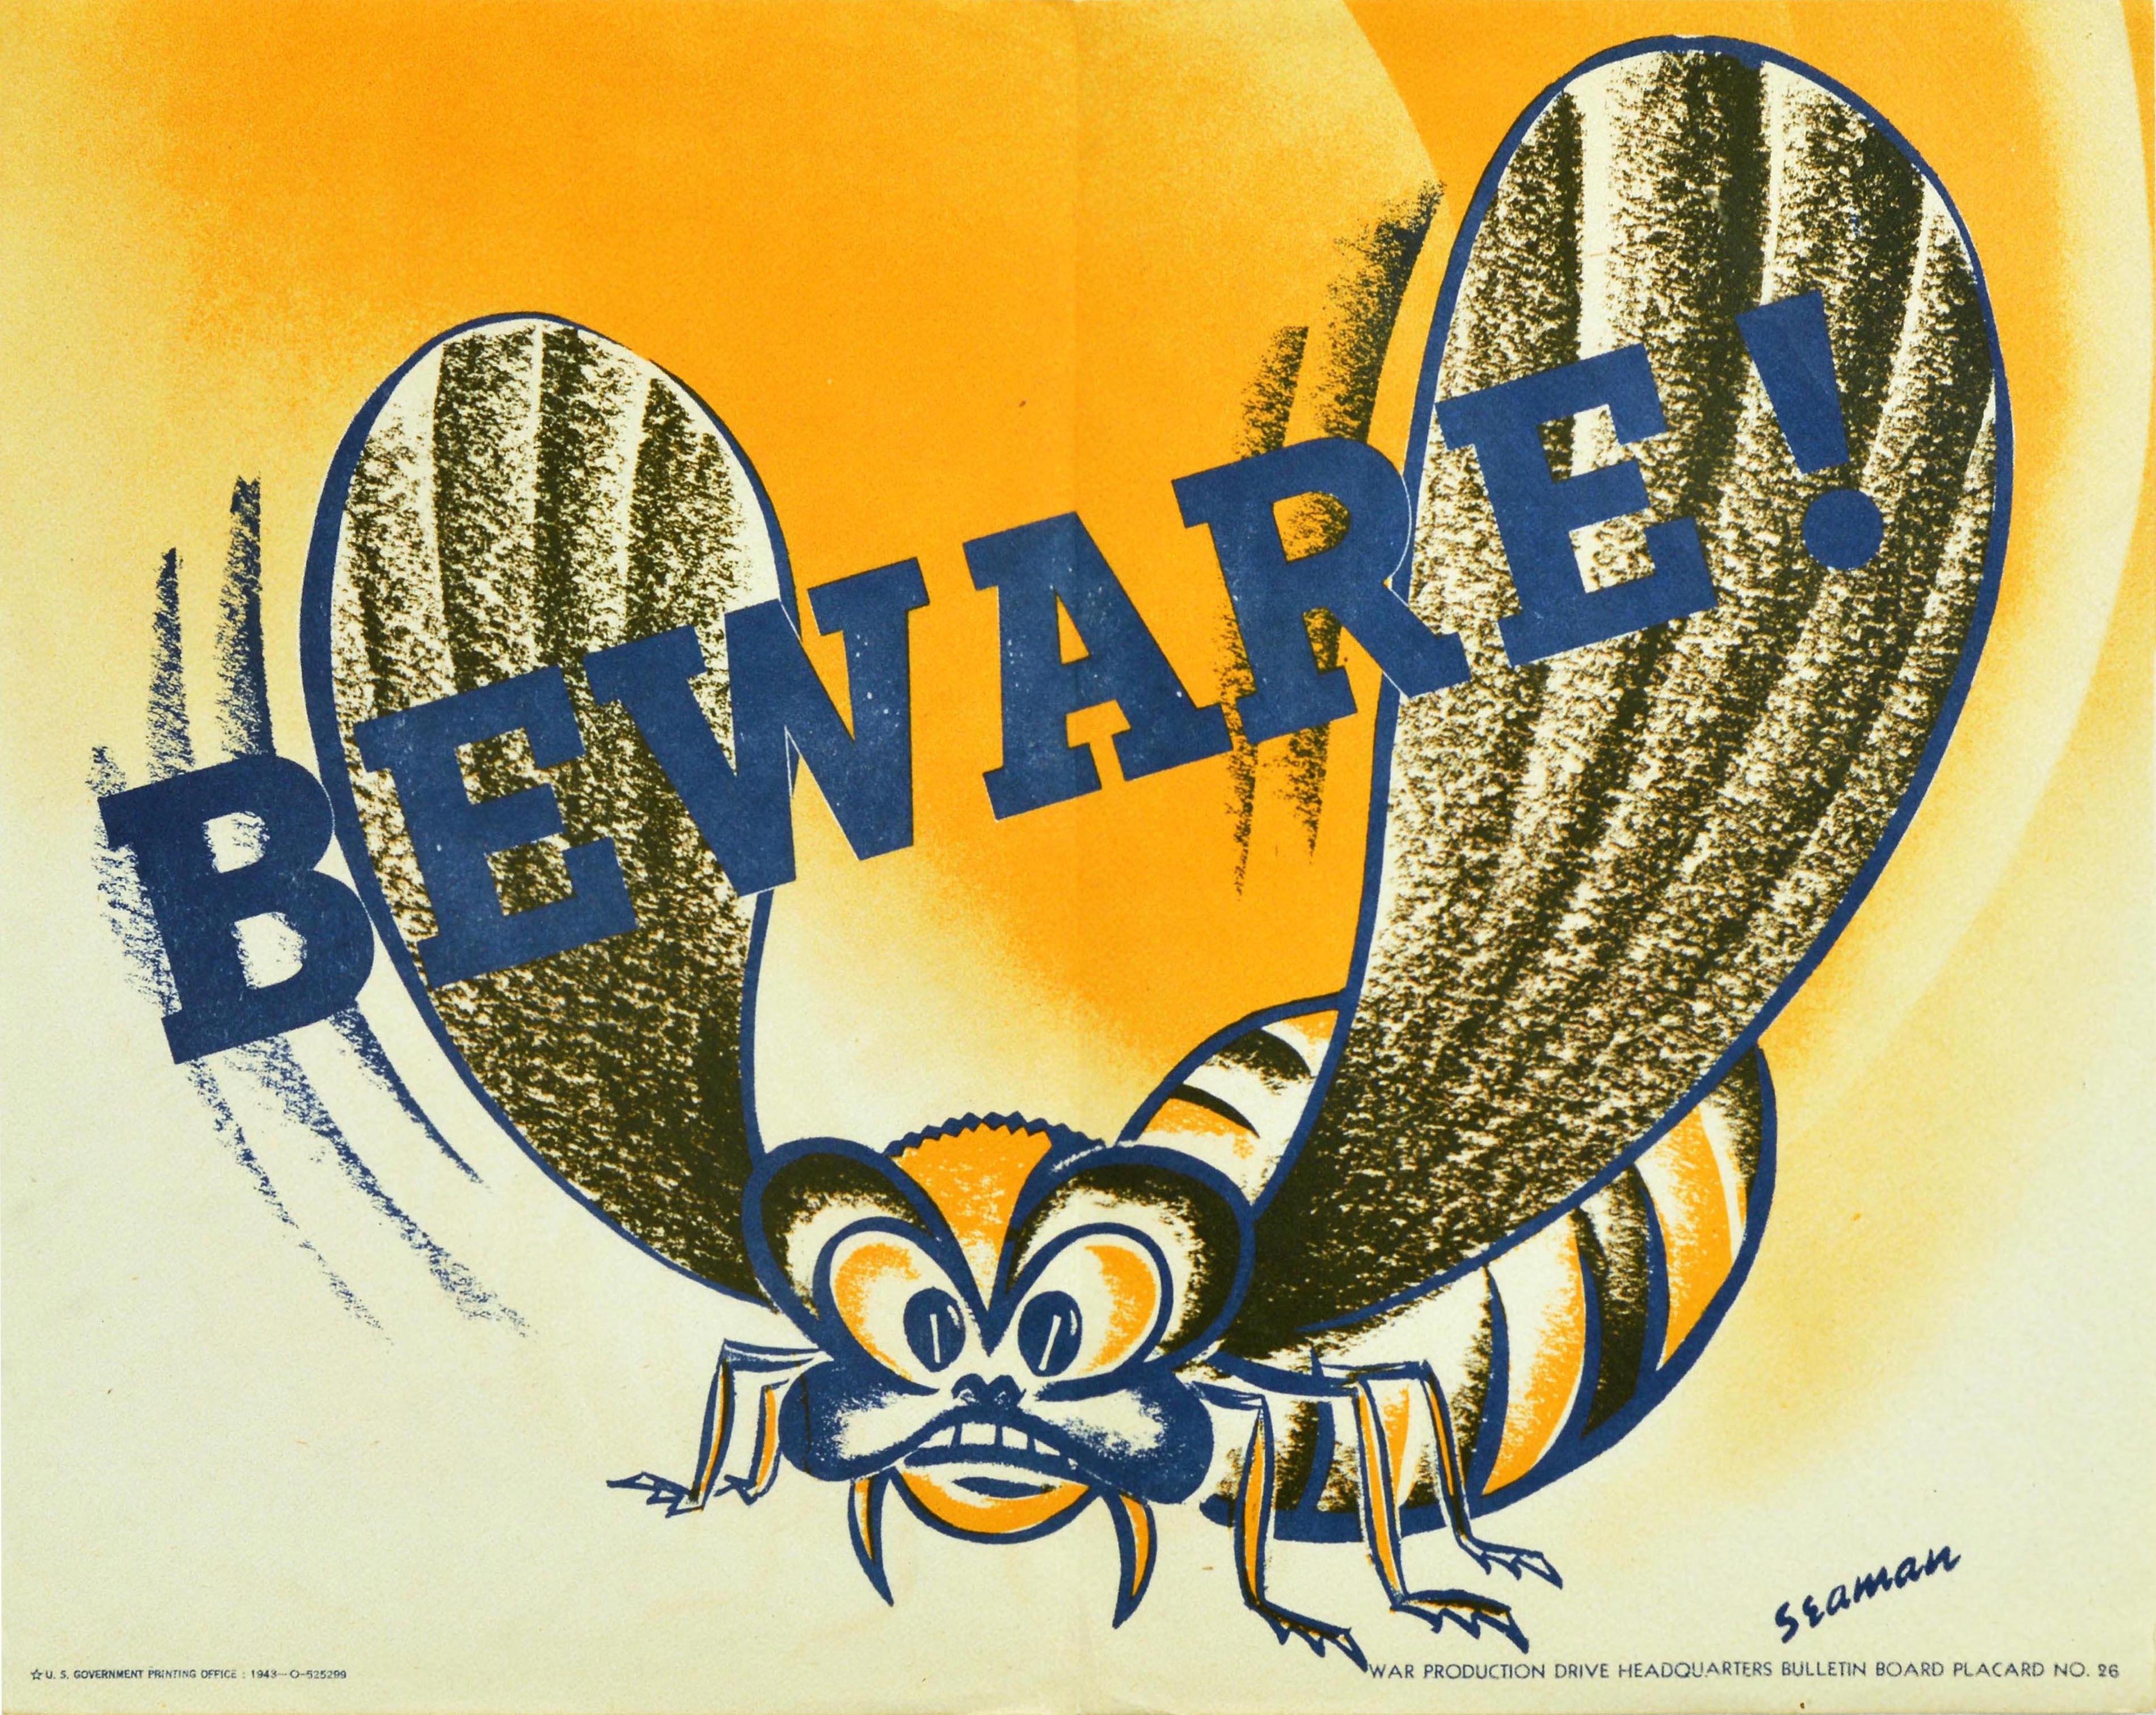 Seaman Print - Original Vintage WWII Propaganda Poster Beware Wasp Design War Production Drive